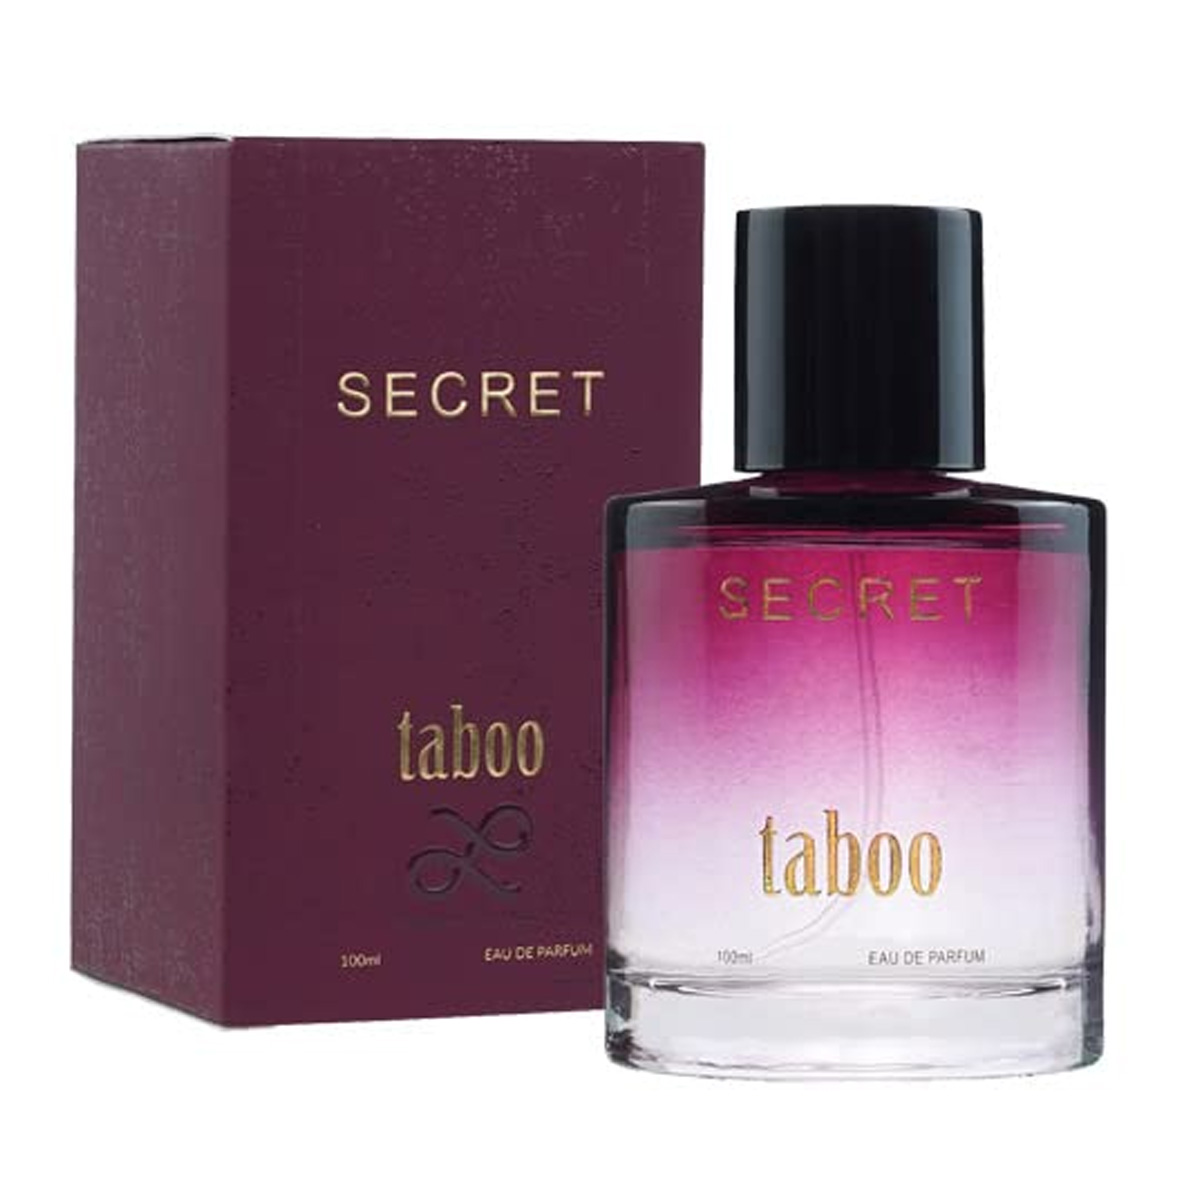 Perfume Lounge Taboo Secret Eau De Parfum, 100ml